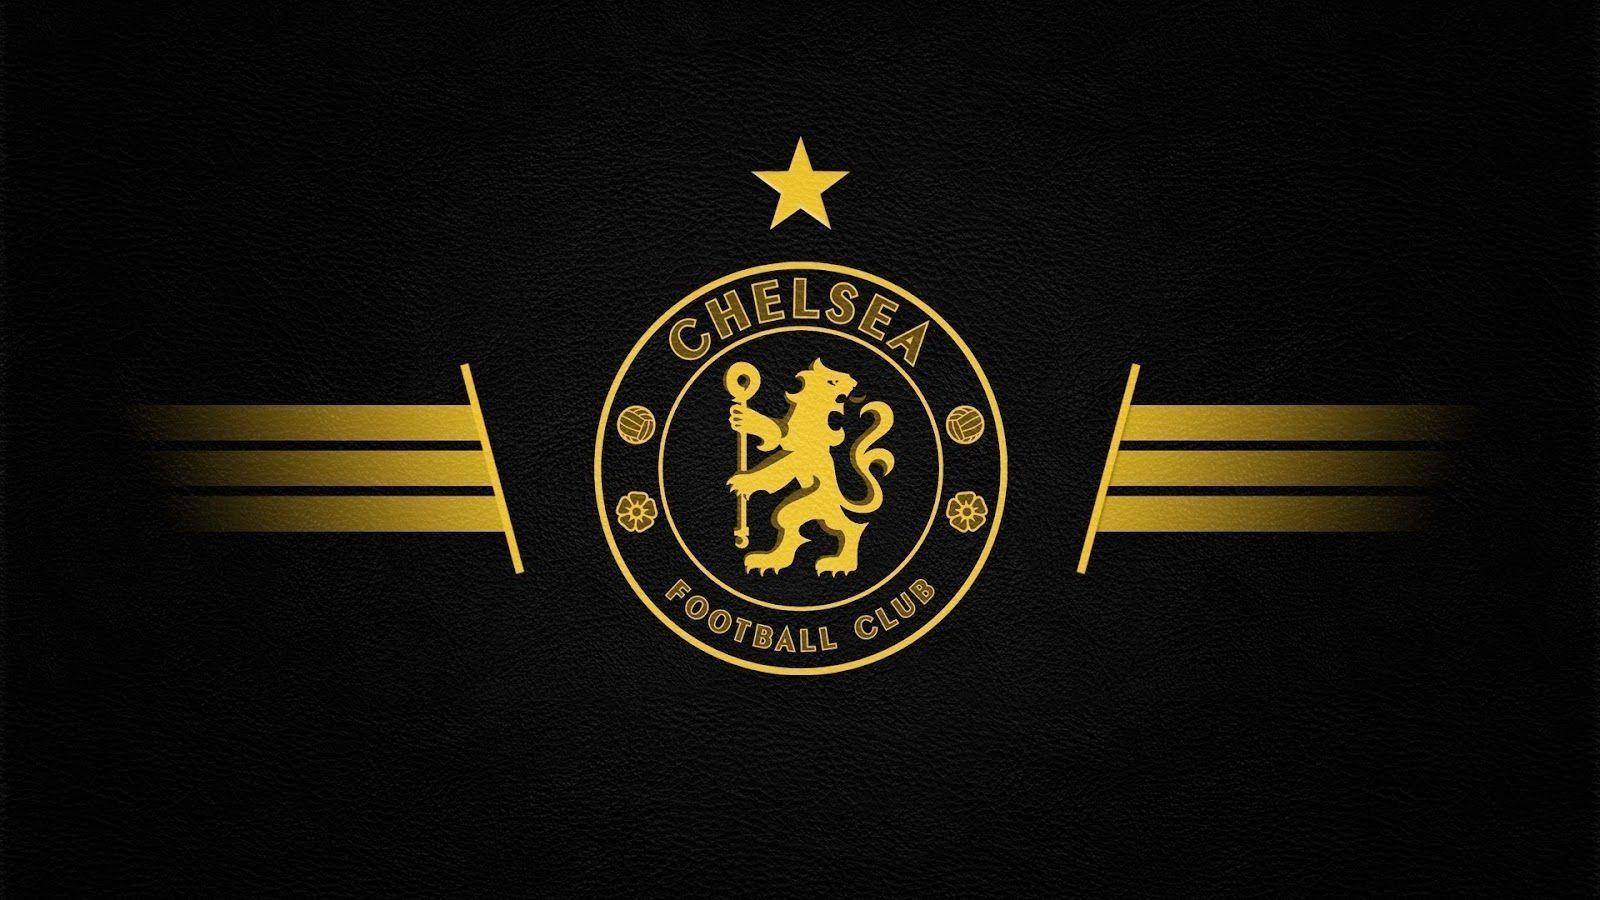 Download Chelsea Fc Logo Wallpaper Car Picture